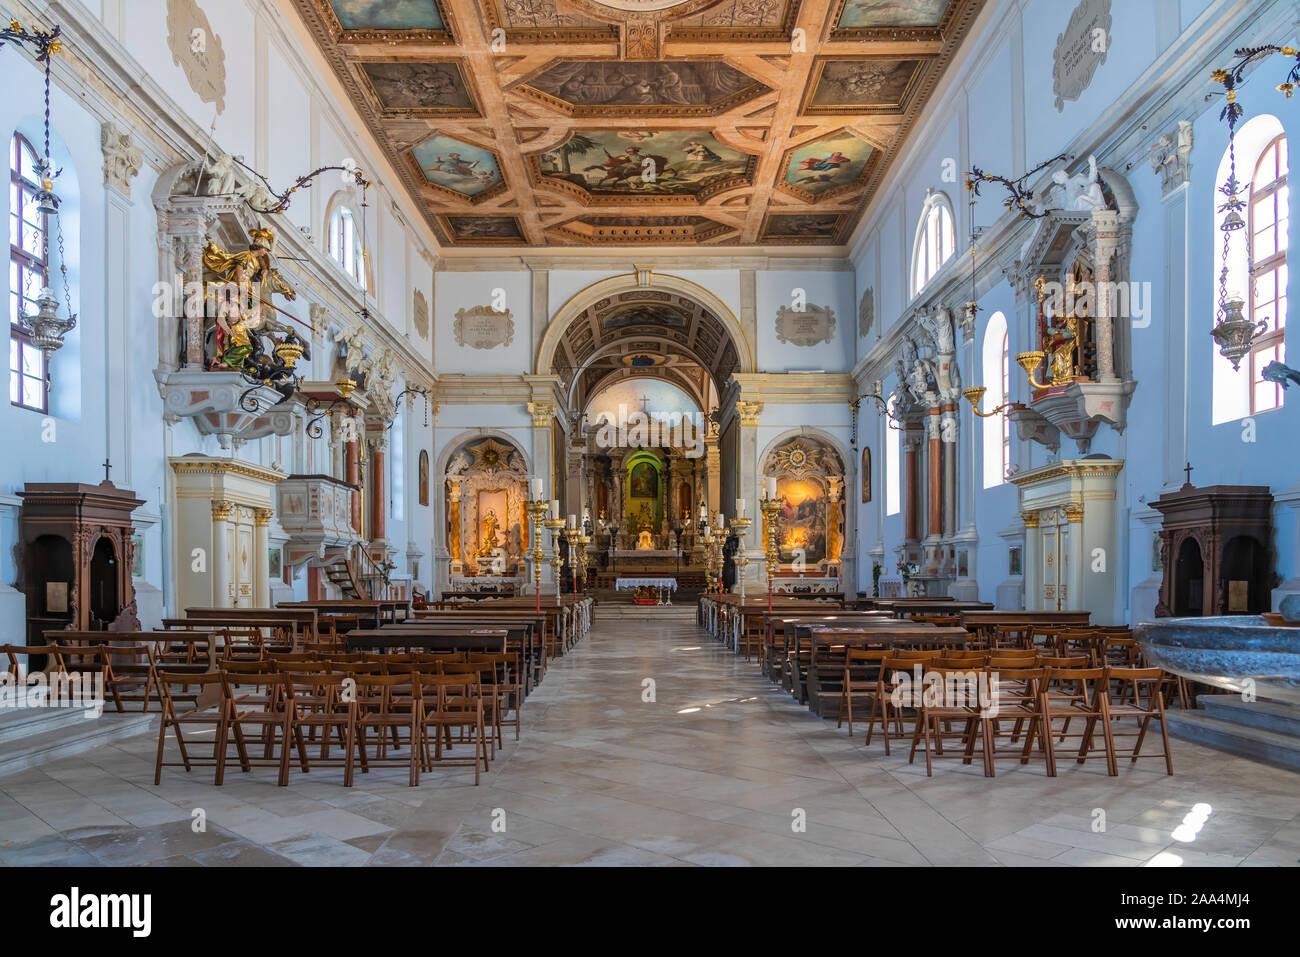 The St. George's Parish Church interior in Piran, Slovenia, Europe. Stock Photo